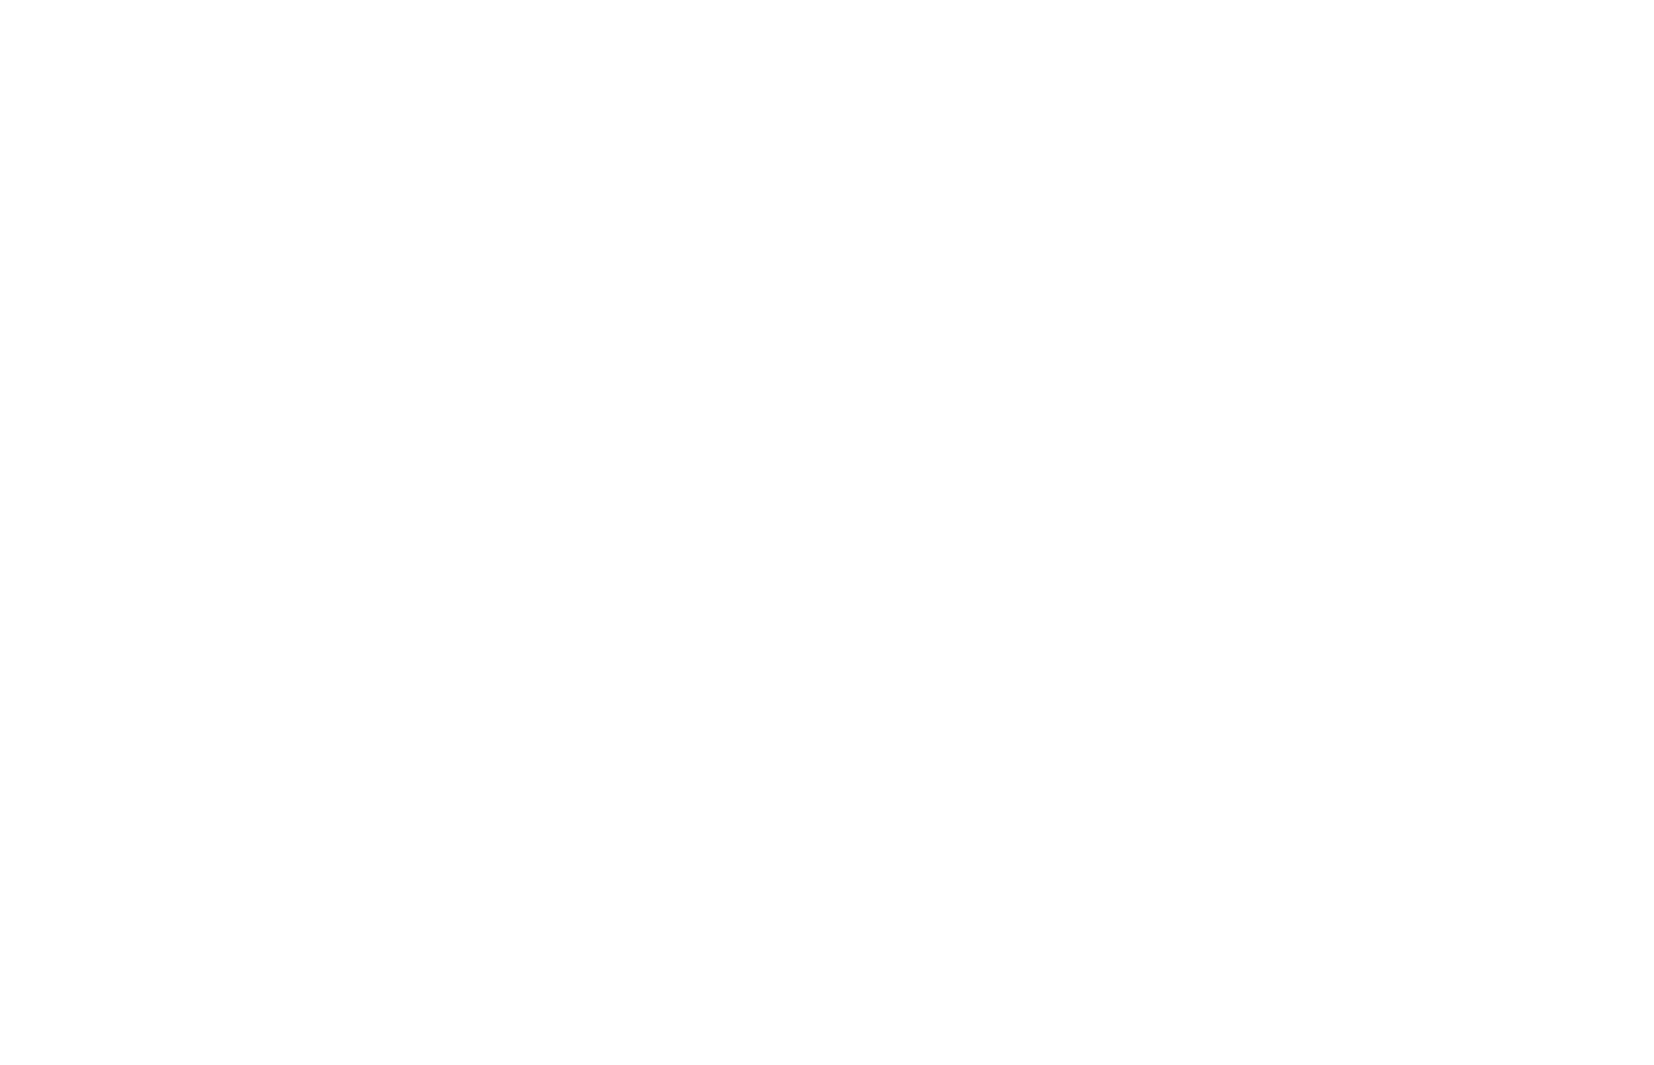 EasyLiving Films